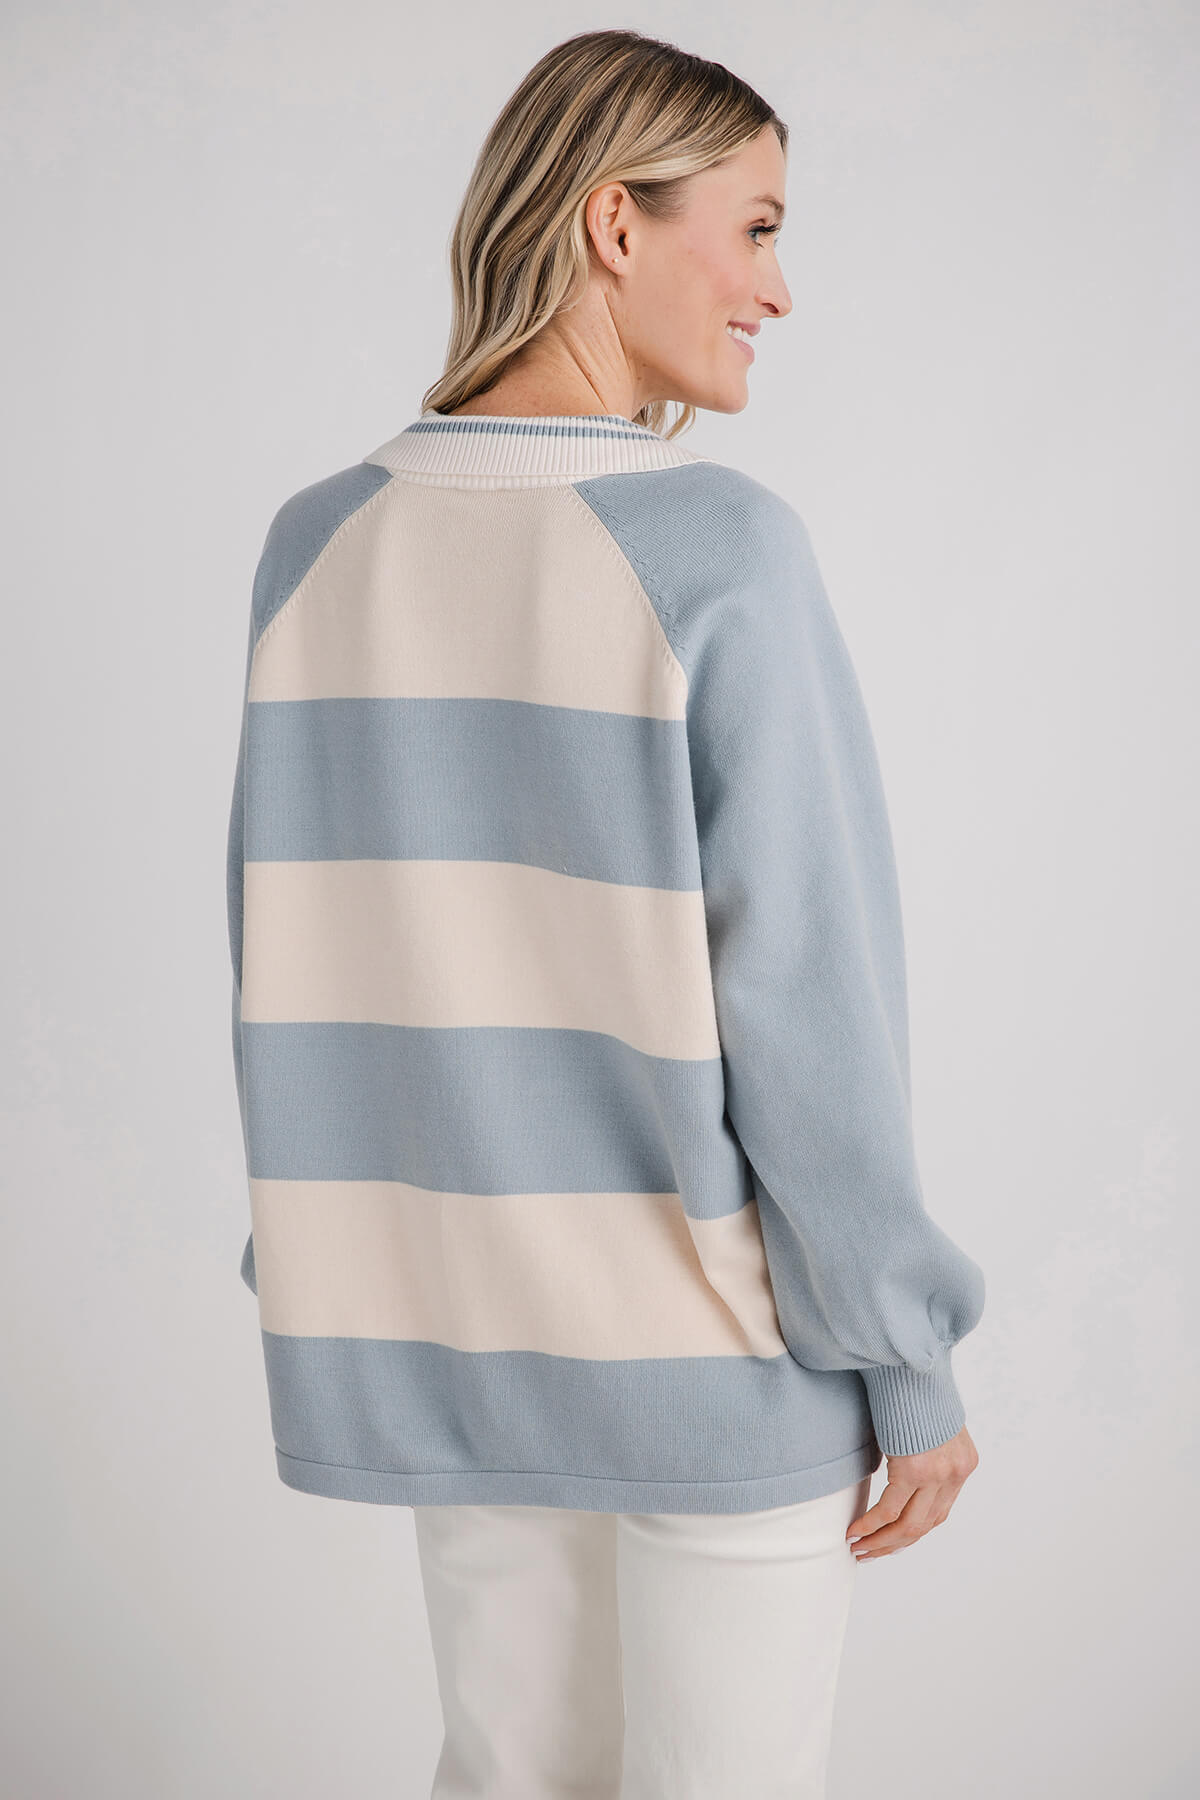 Lelis Long Sleeve V-neck Striped Over Sized Sweater